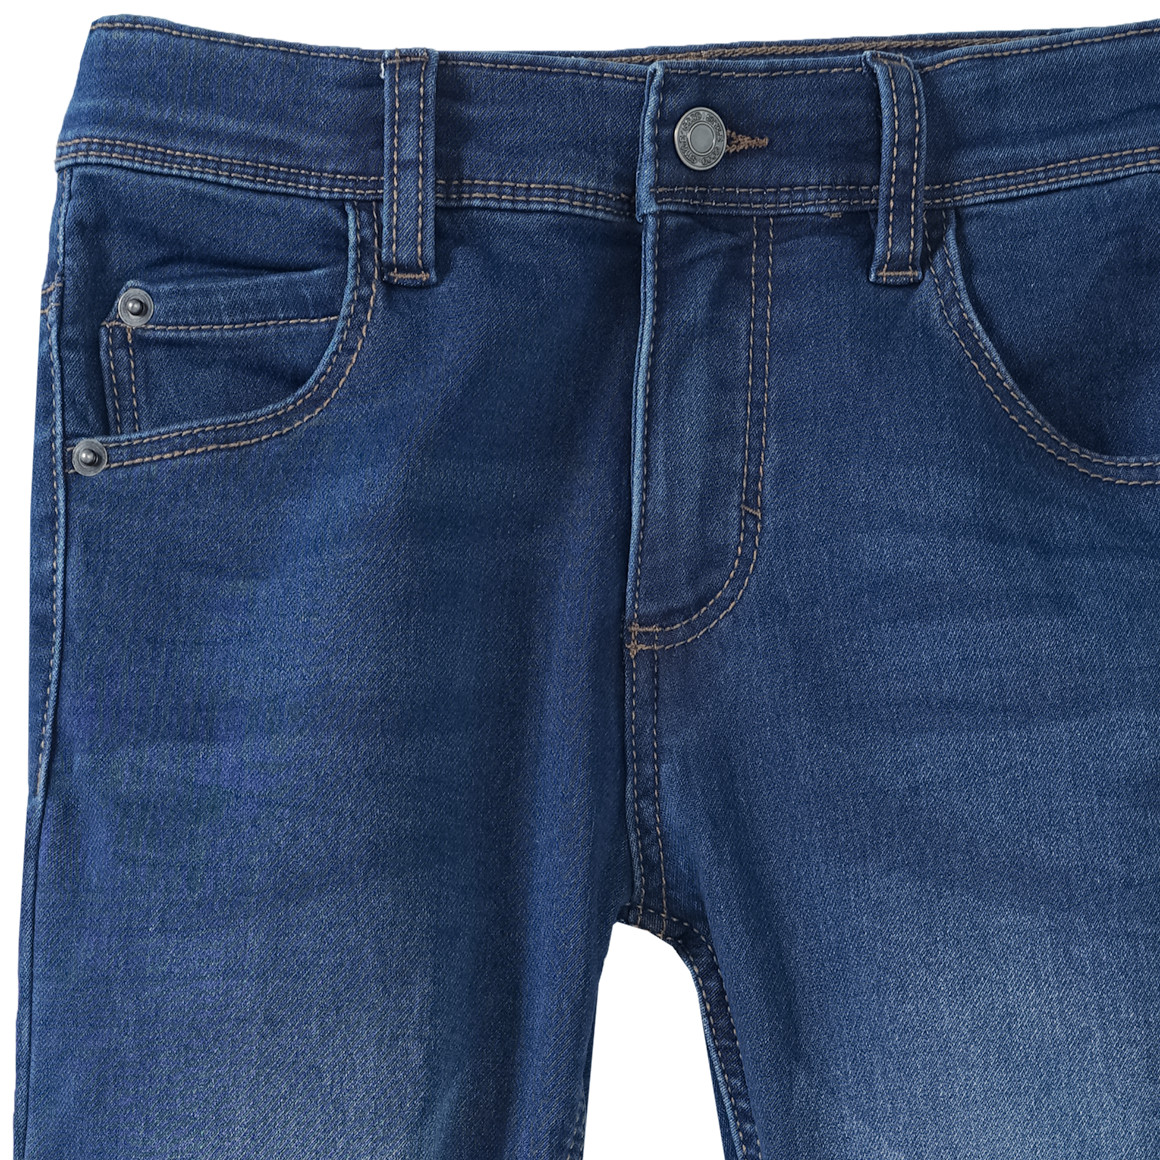 Bloody serie Avondeten Jungen Slim-Jeans im Five-Pocket-Style | Ernsting's family